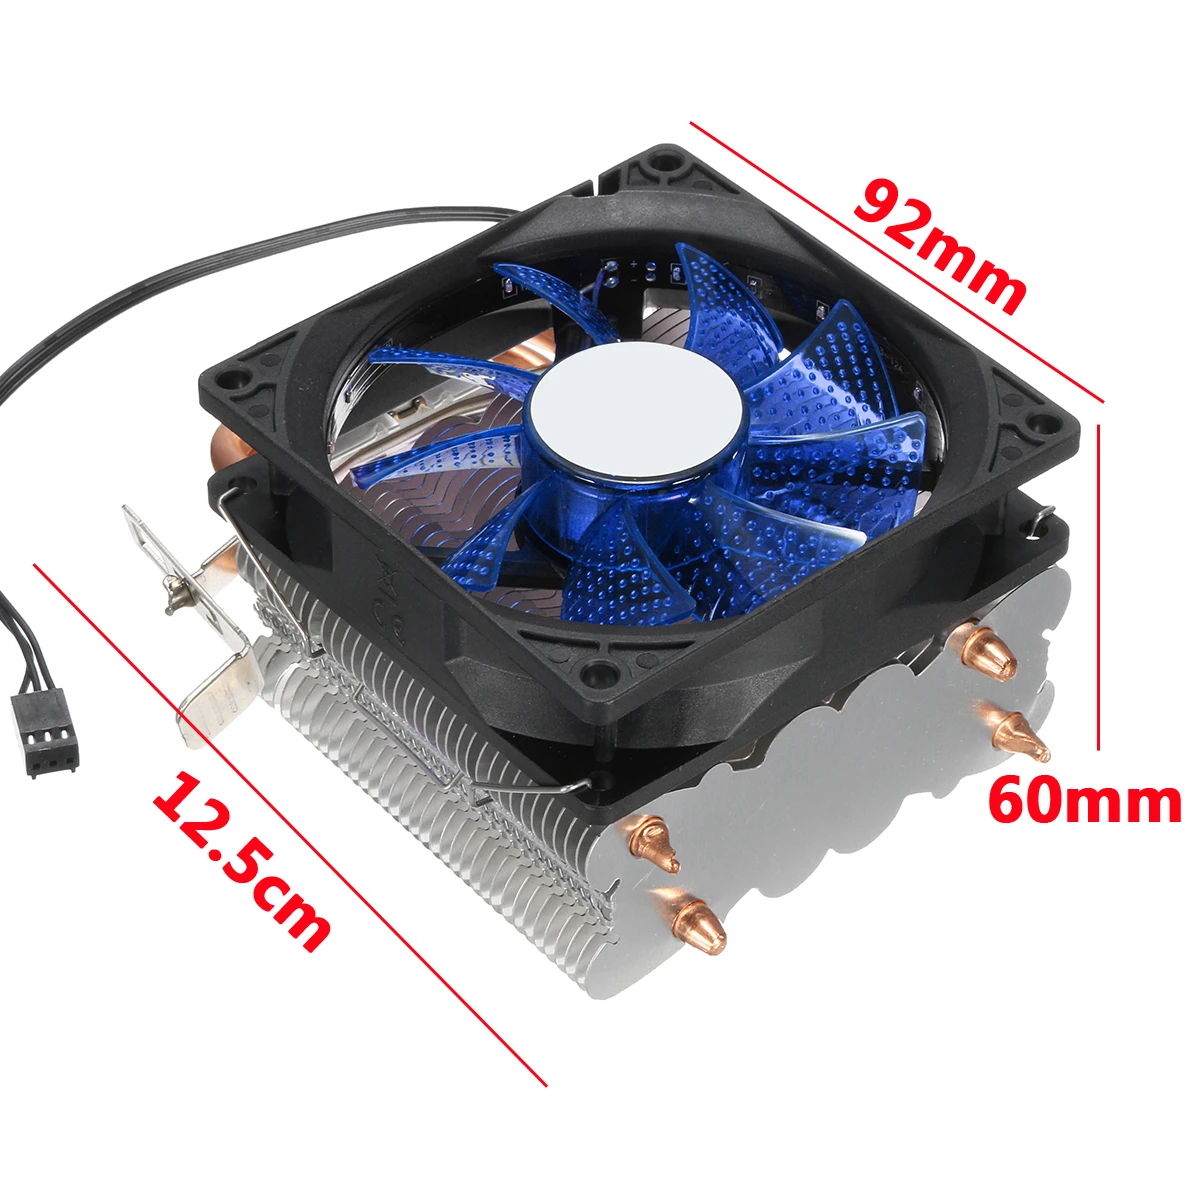 9cm LED 3 Pin CPU Cooling Fan Cooler Heat Sink For Intel LAG/1155/1156 AMD 754/AM2/AM2+AM3/FM1